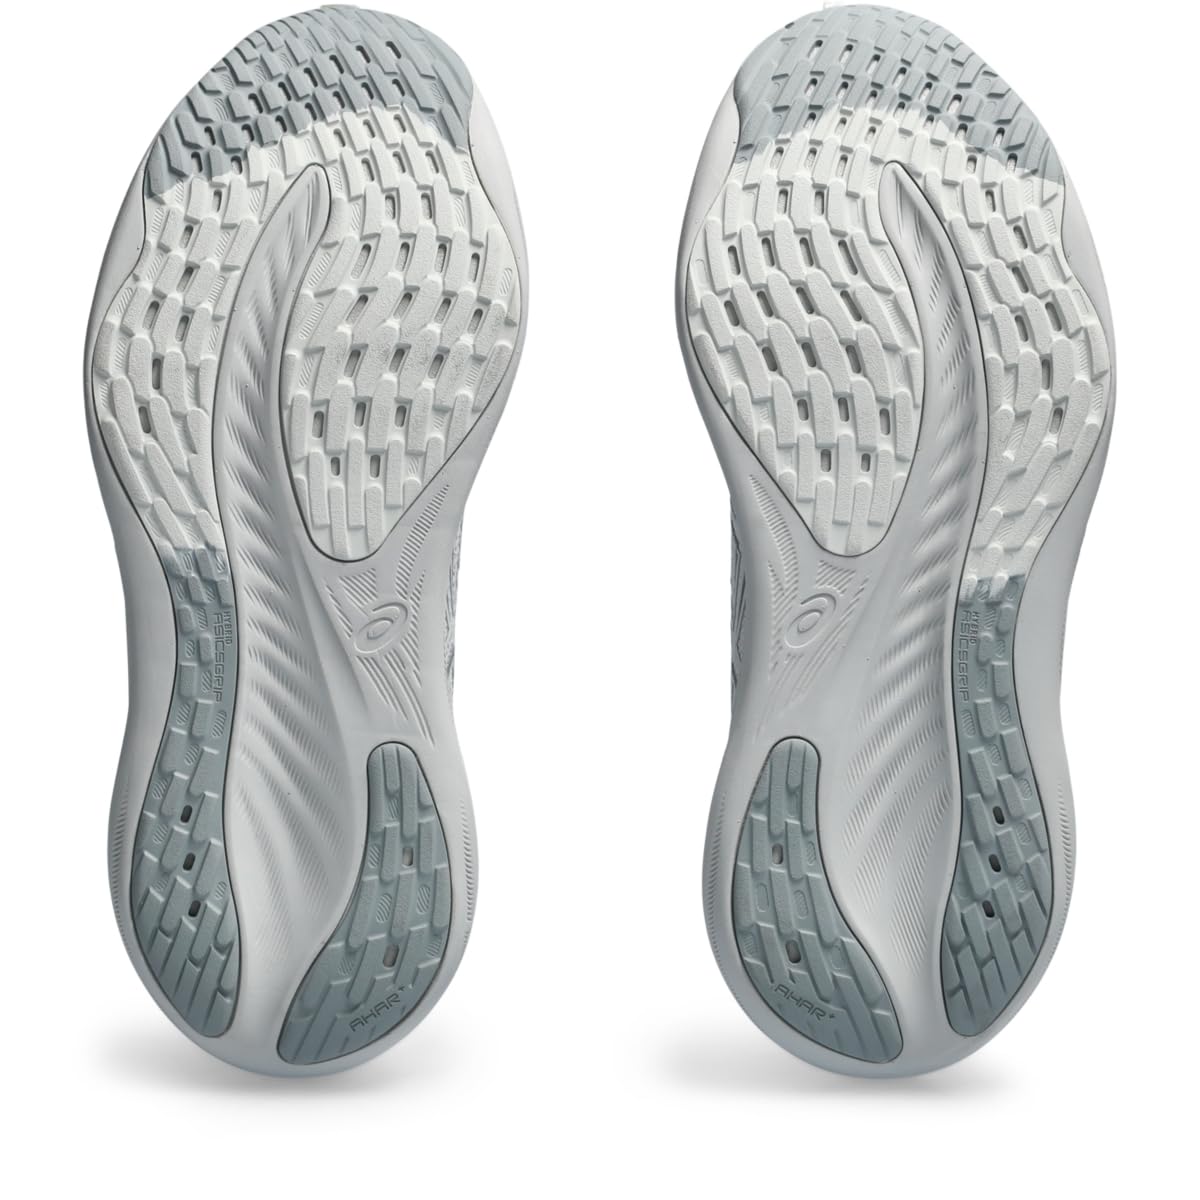 ASICS Women's Gel-Nimbus 26 Running Shoe, 8.5, Concrete/Pure Silver